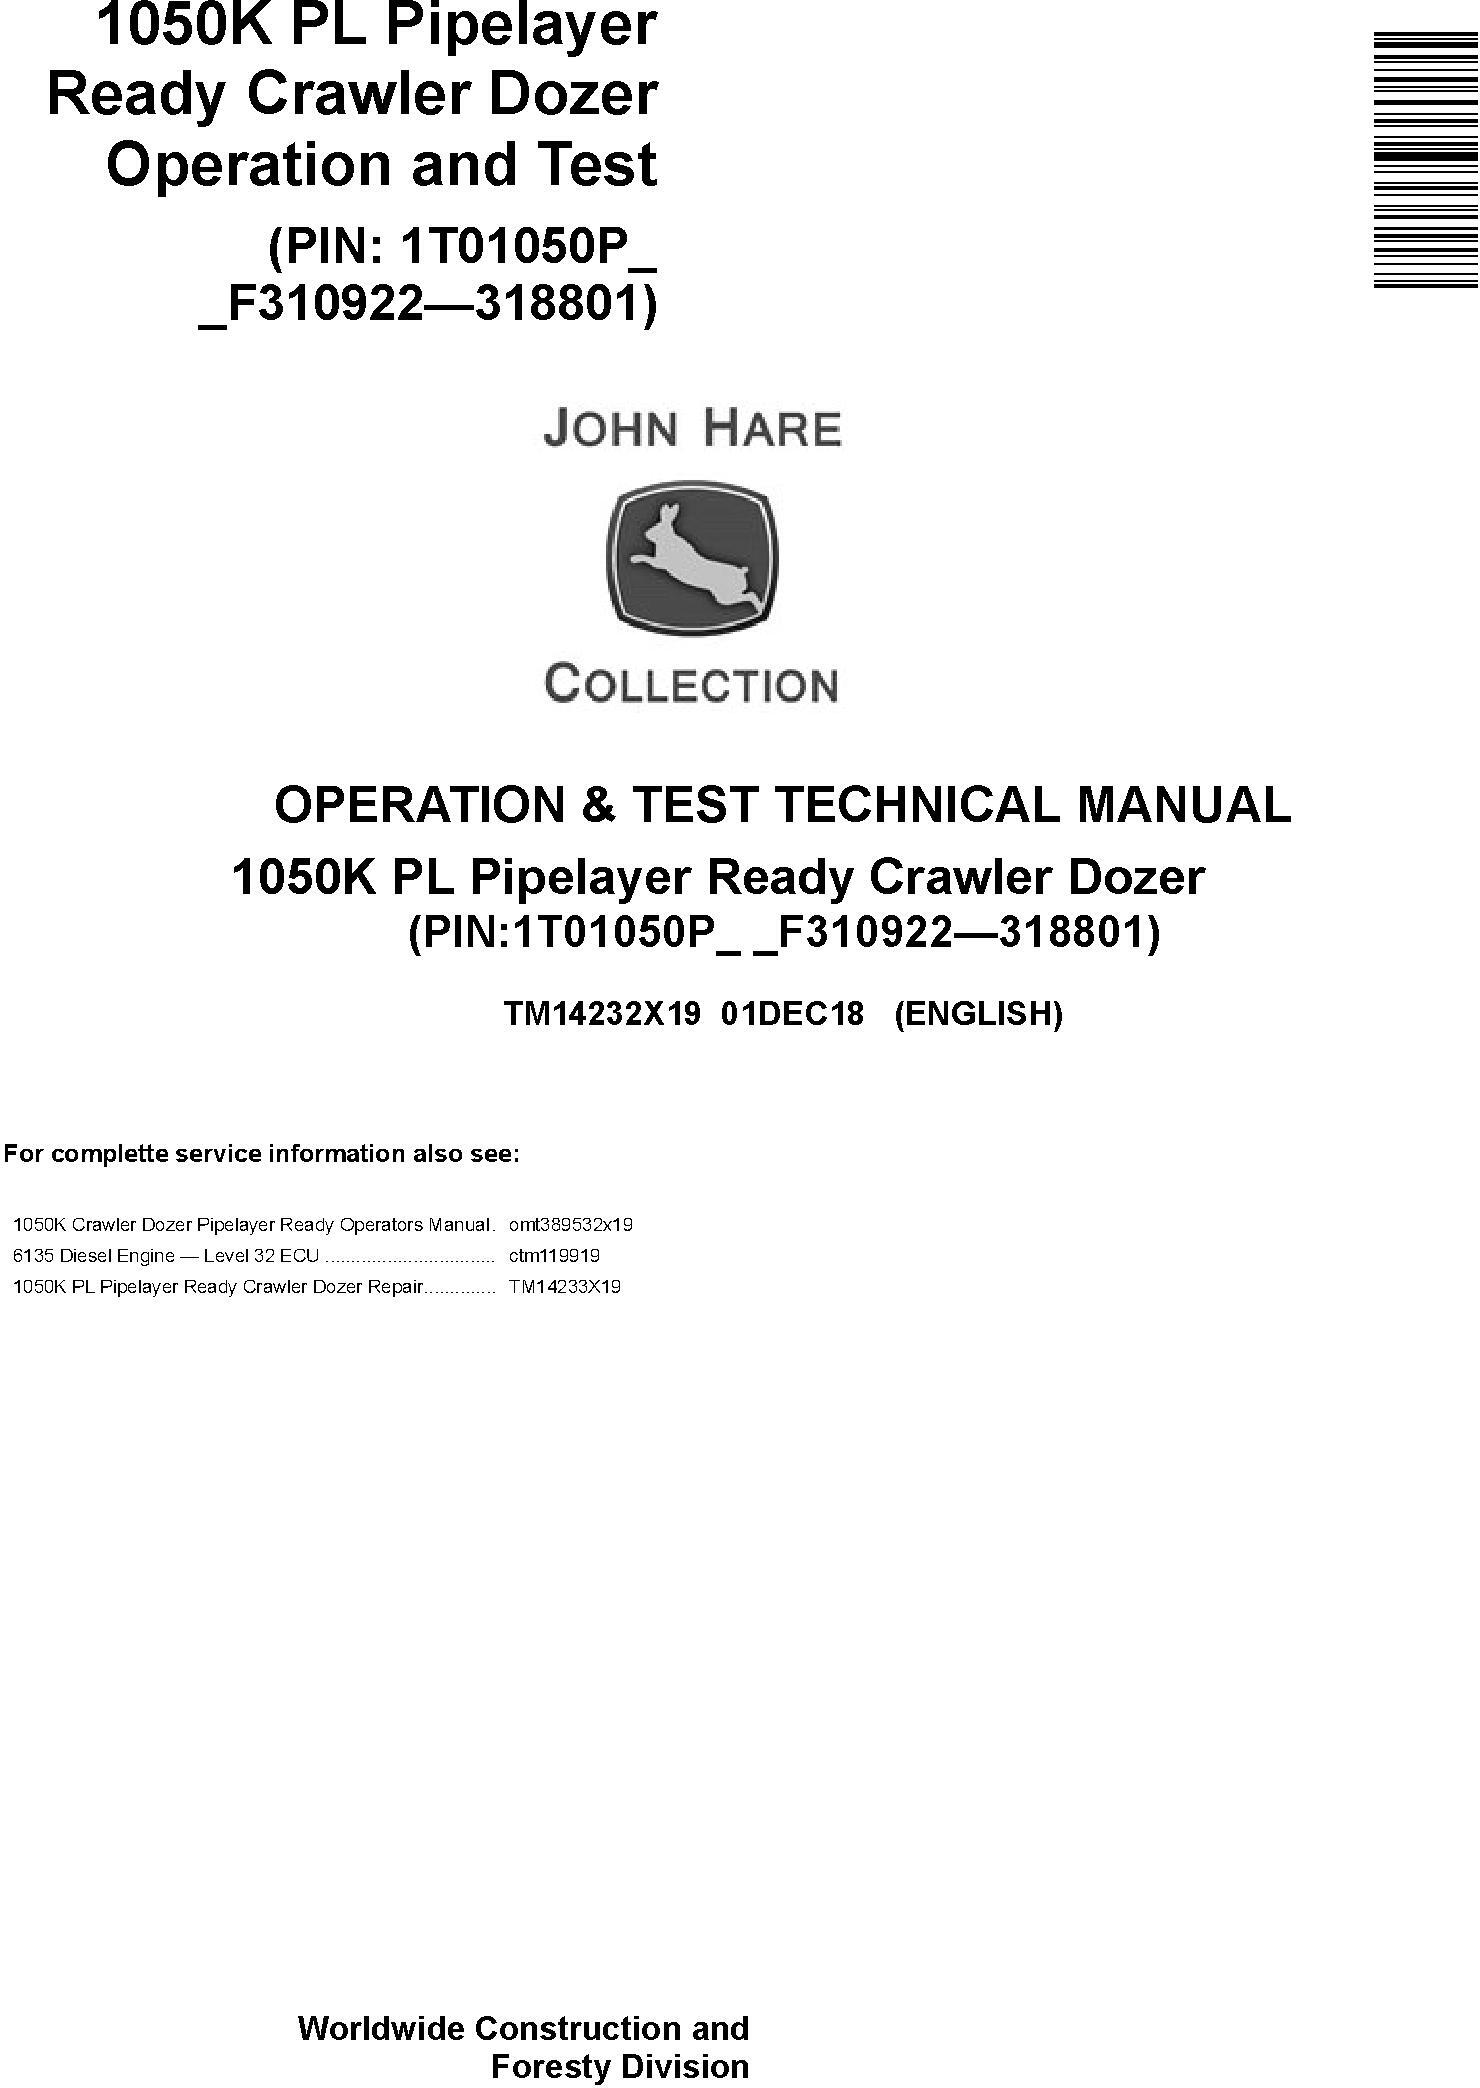 John Deere 1050K PL (SN.F310922-318801) Pipelayer Ready Crawler Dozer Diagnostic Manual (TM14232X19)